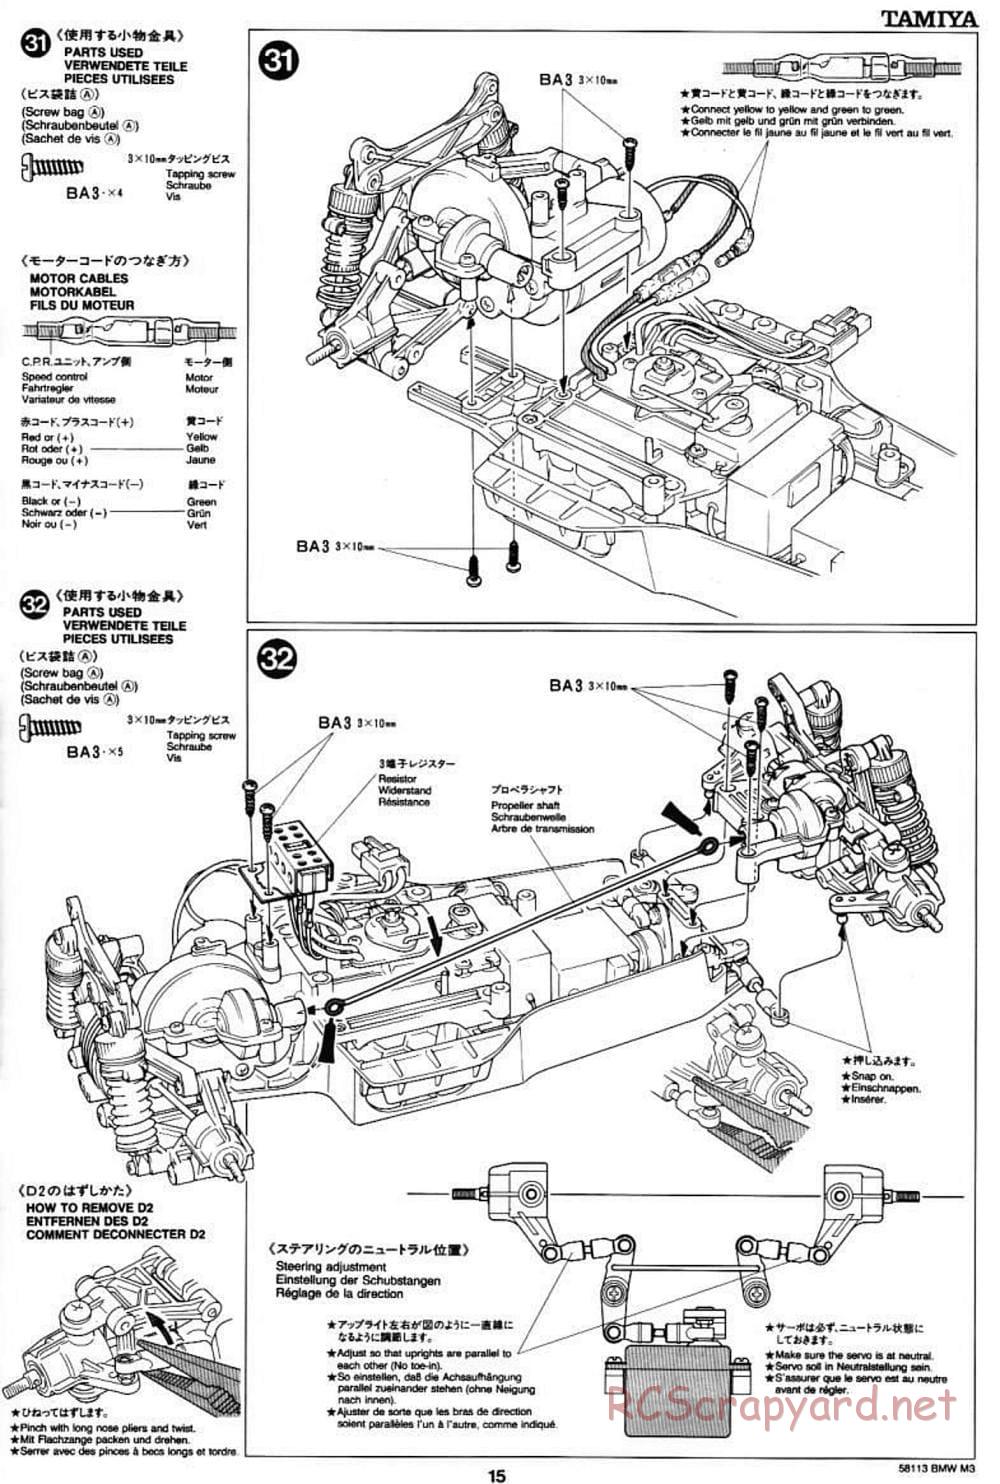 Tamiya - Schnitzer BMW M3 Sport Evo - TA-01 Chassis - Manual - Page 15